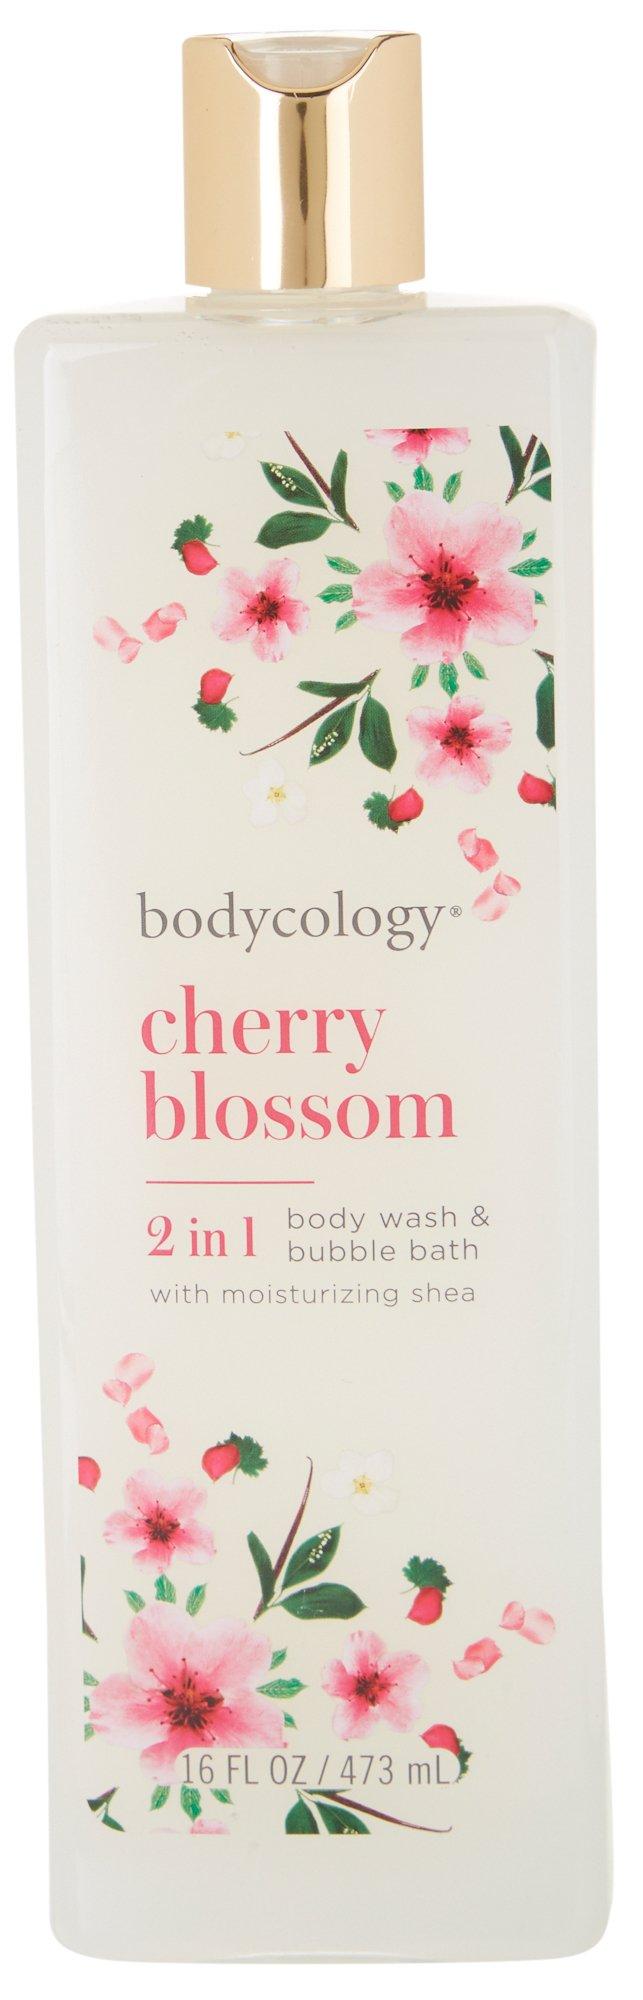 Bodycology Cherry Blossom Body Wash & Bubble Bath